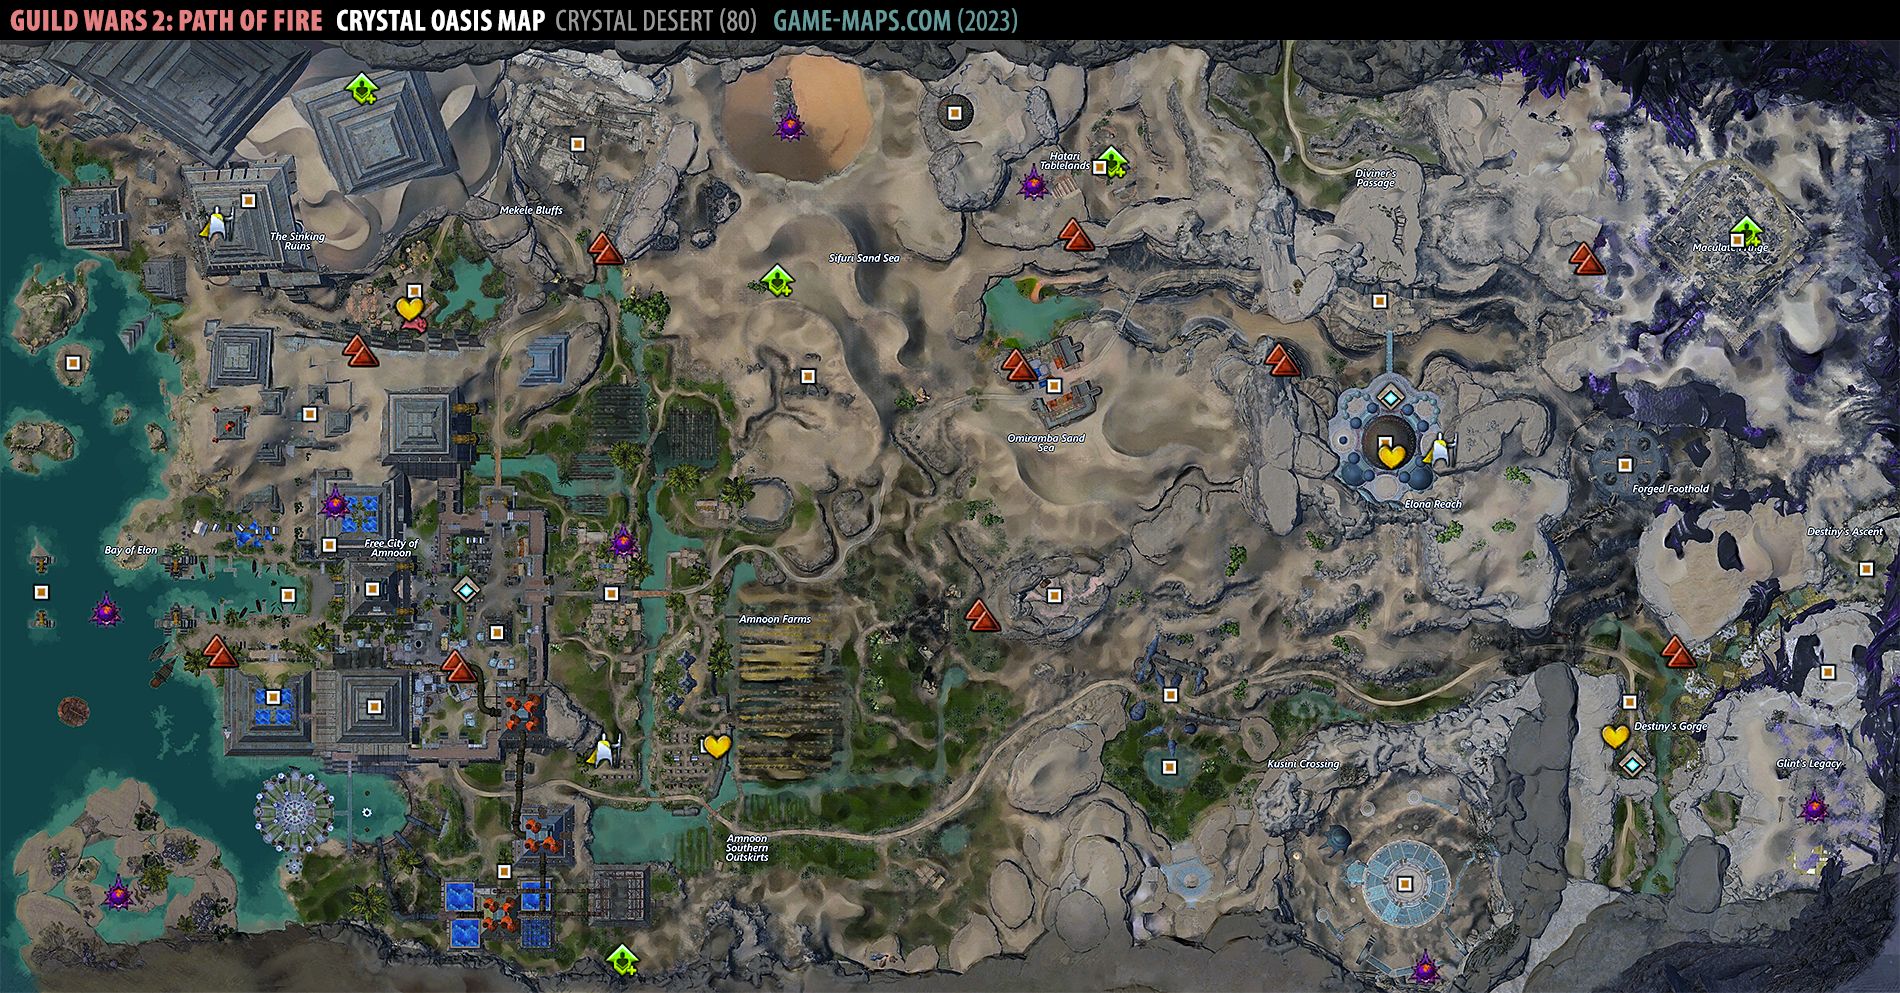 Crystal Oasis Map Guild Wars 2